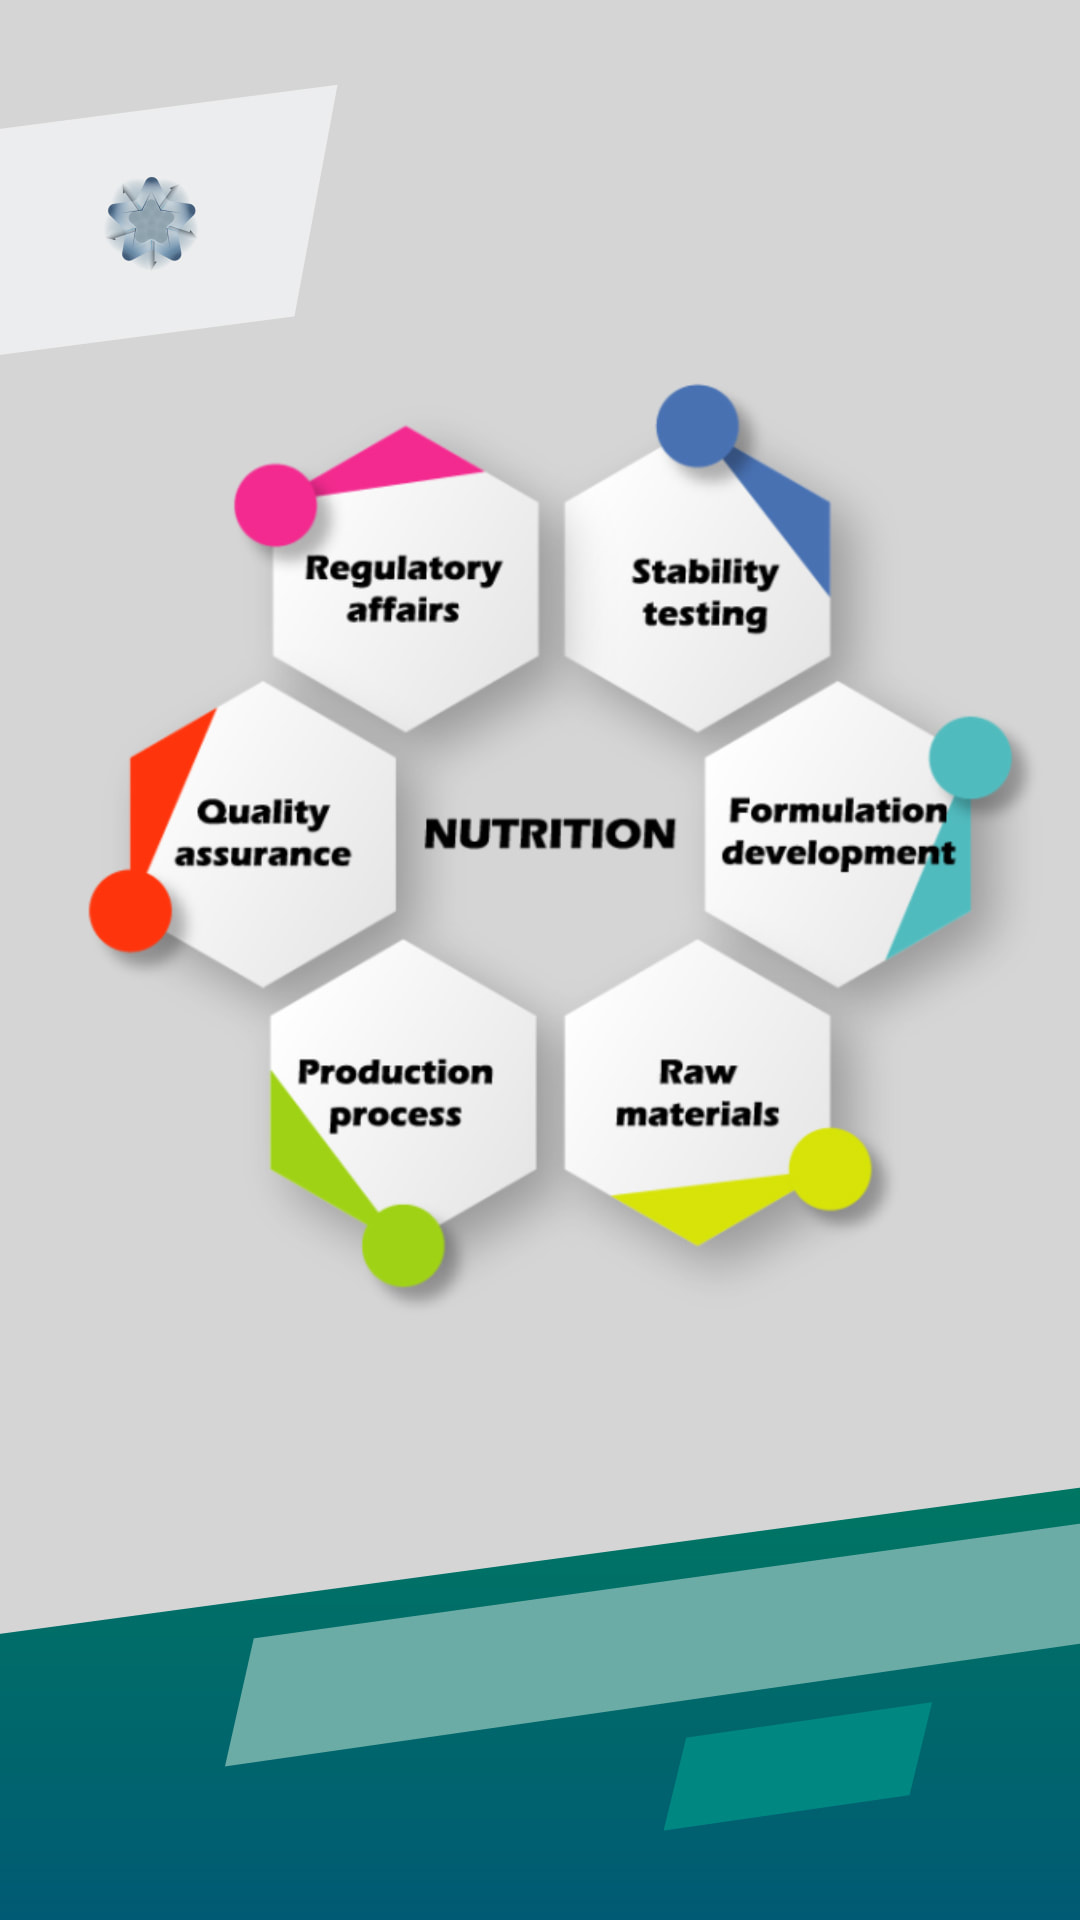 Nutrition regulatory affairs, stability testing, formulation